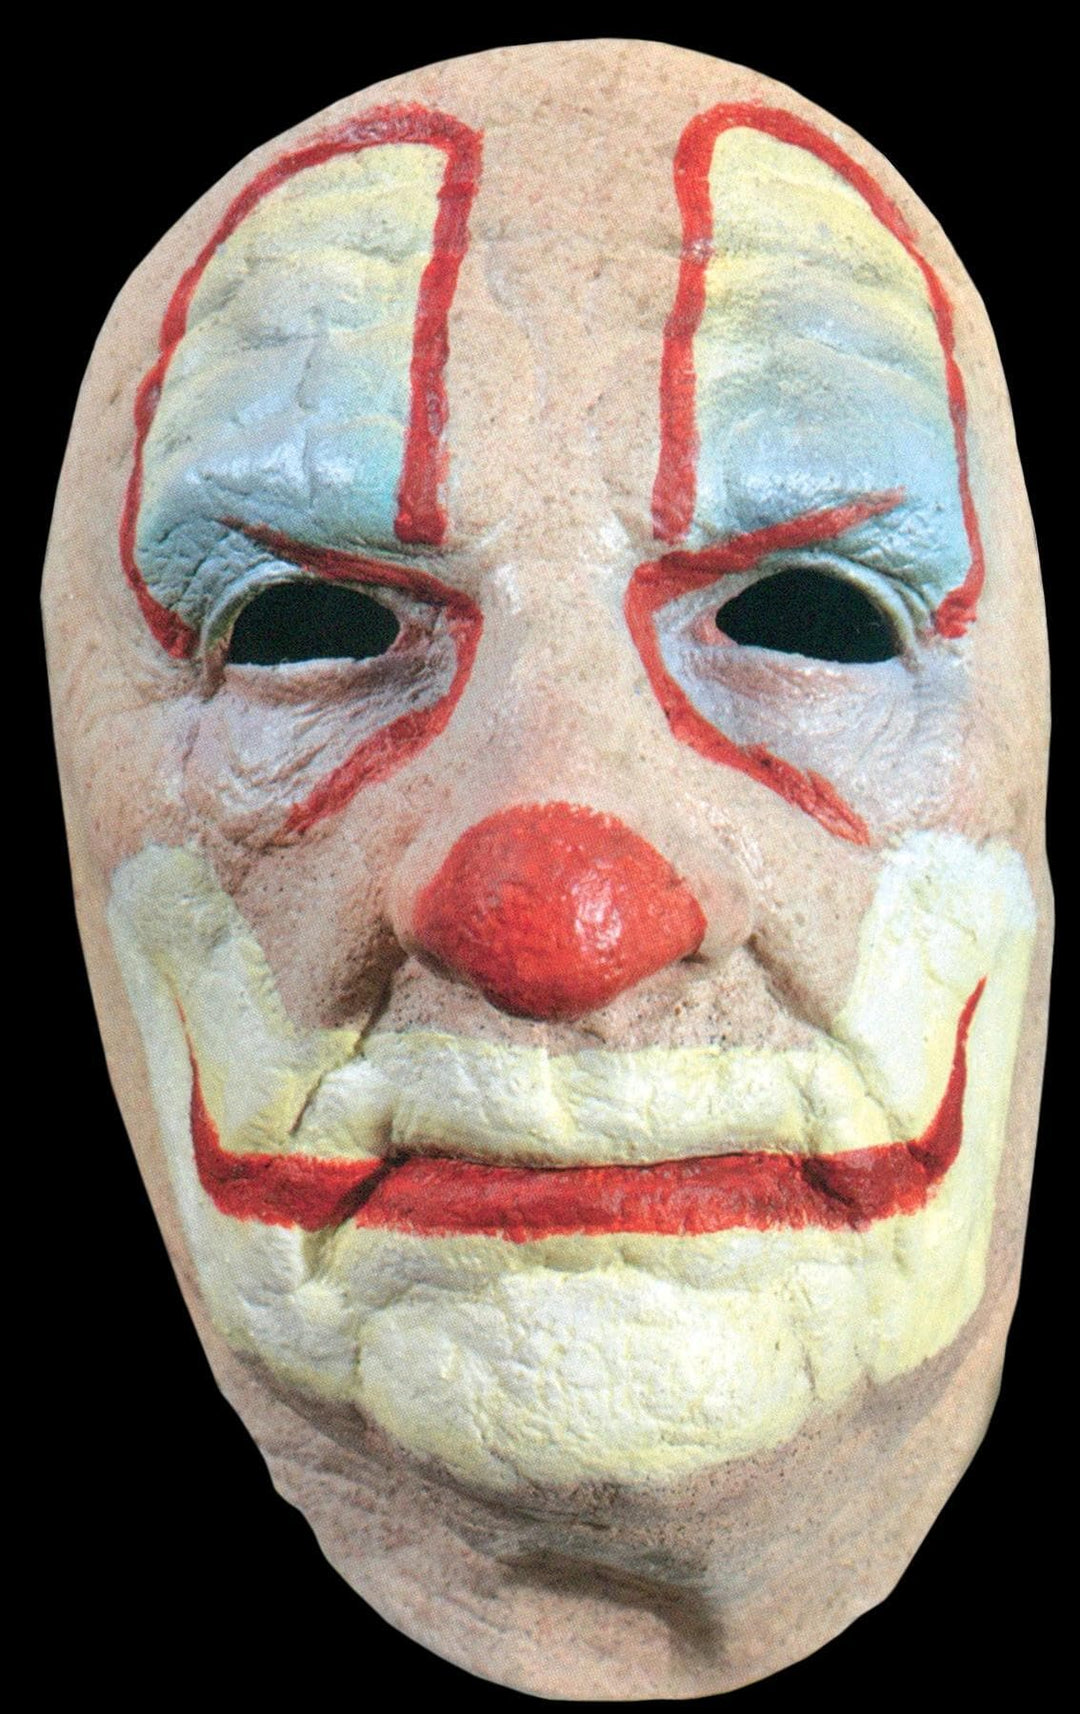 "Old Clown" Halloween Face Mask